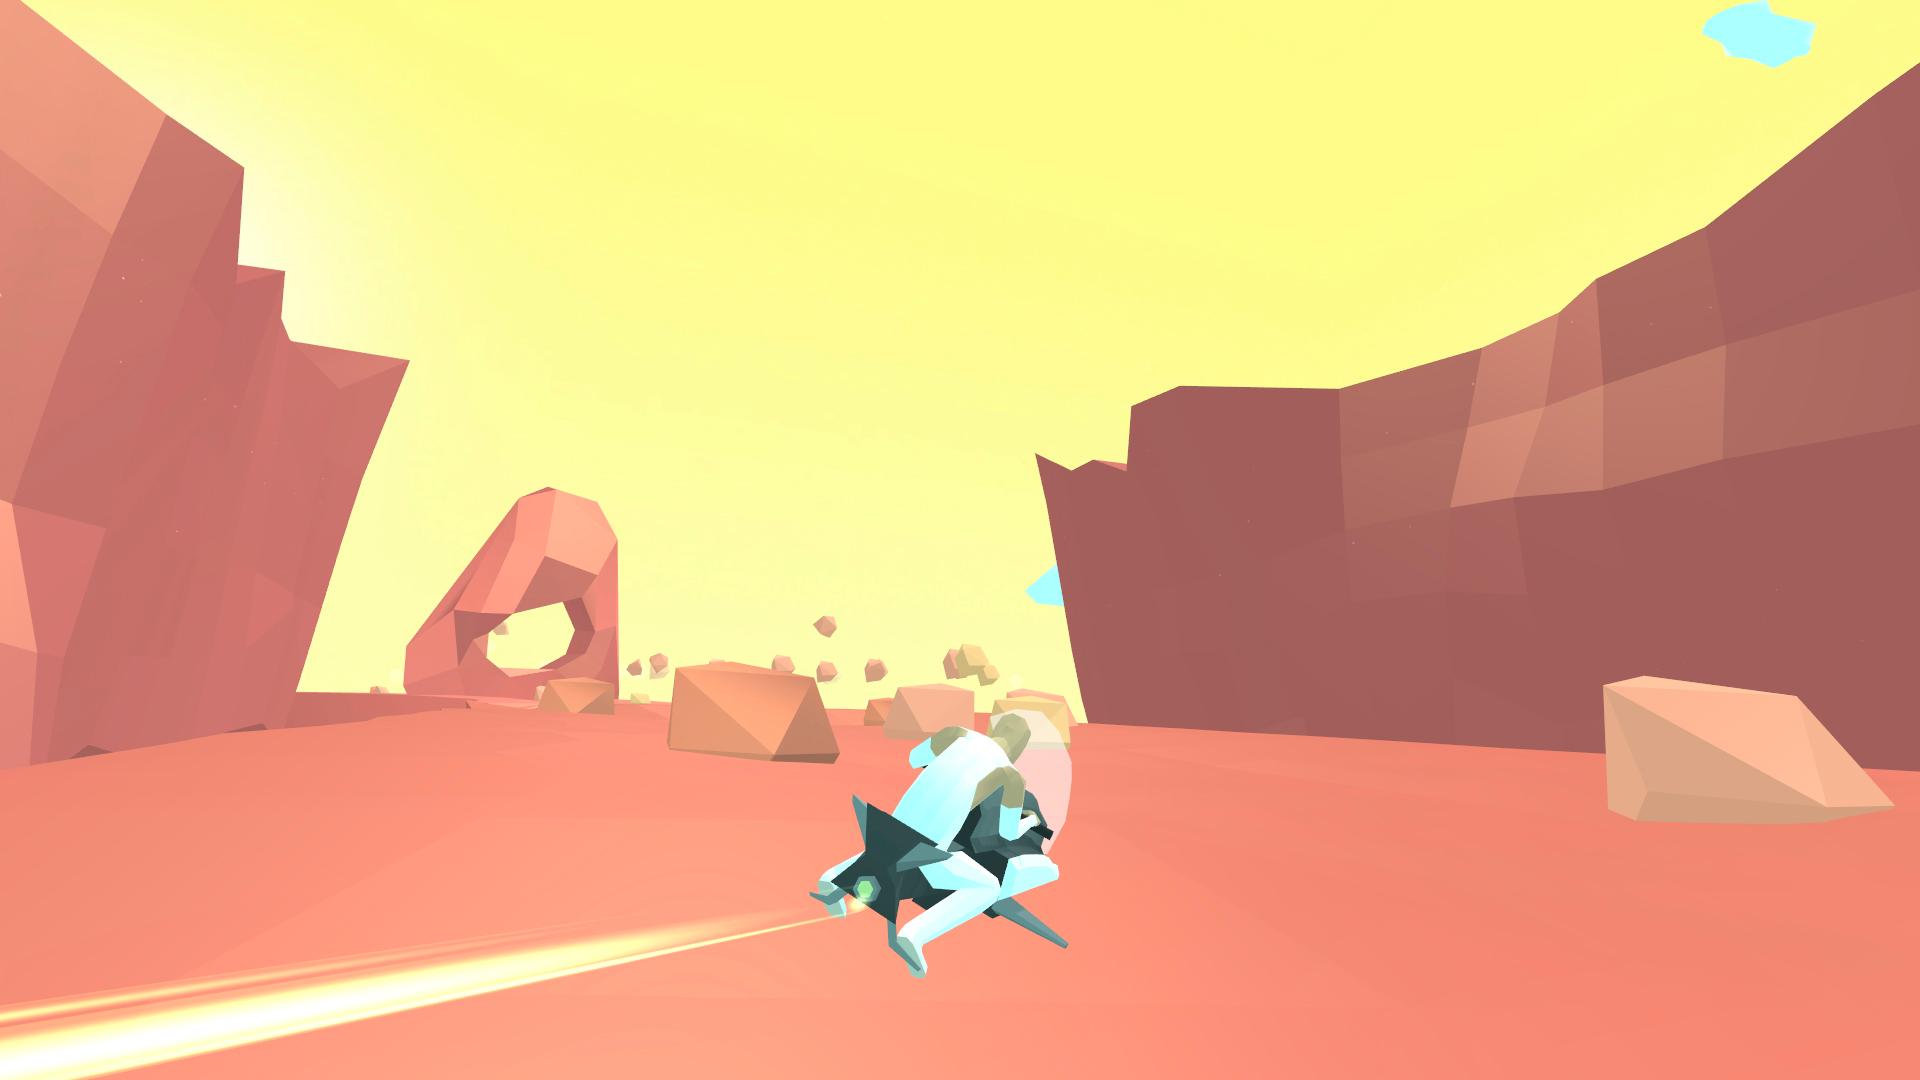 Screenshot №3 from game Laraan